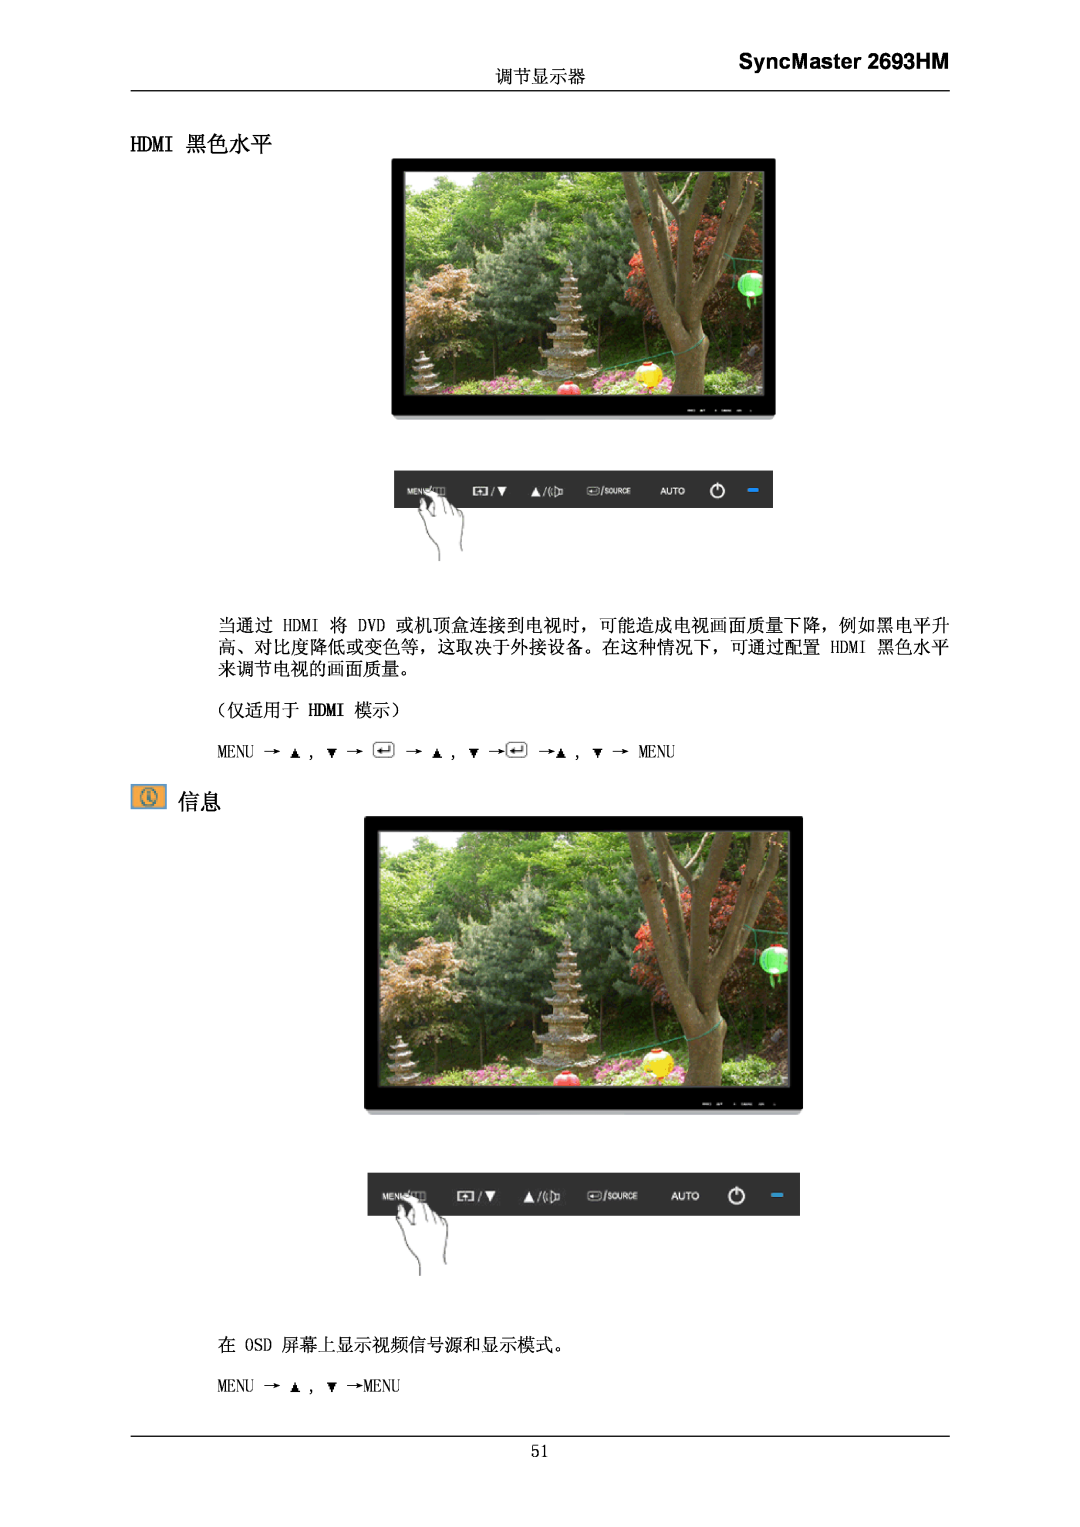 Samsung LS26KIERFV/EDC Hdmi 黑色水平, （仅适用于 Hdmi 模示） Menu → , → → , → → , → Menu, 在 Osd 屏幕上显示视频信号源和显示模式。 Menu → , →Menu, 调节显示器 